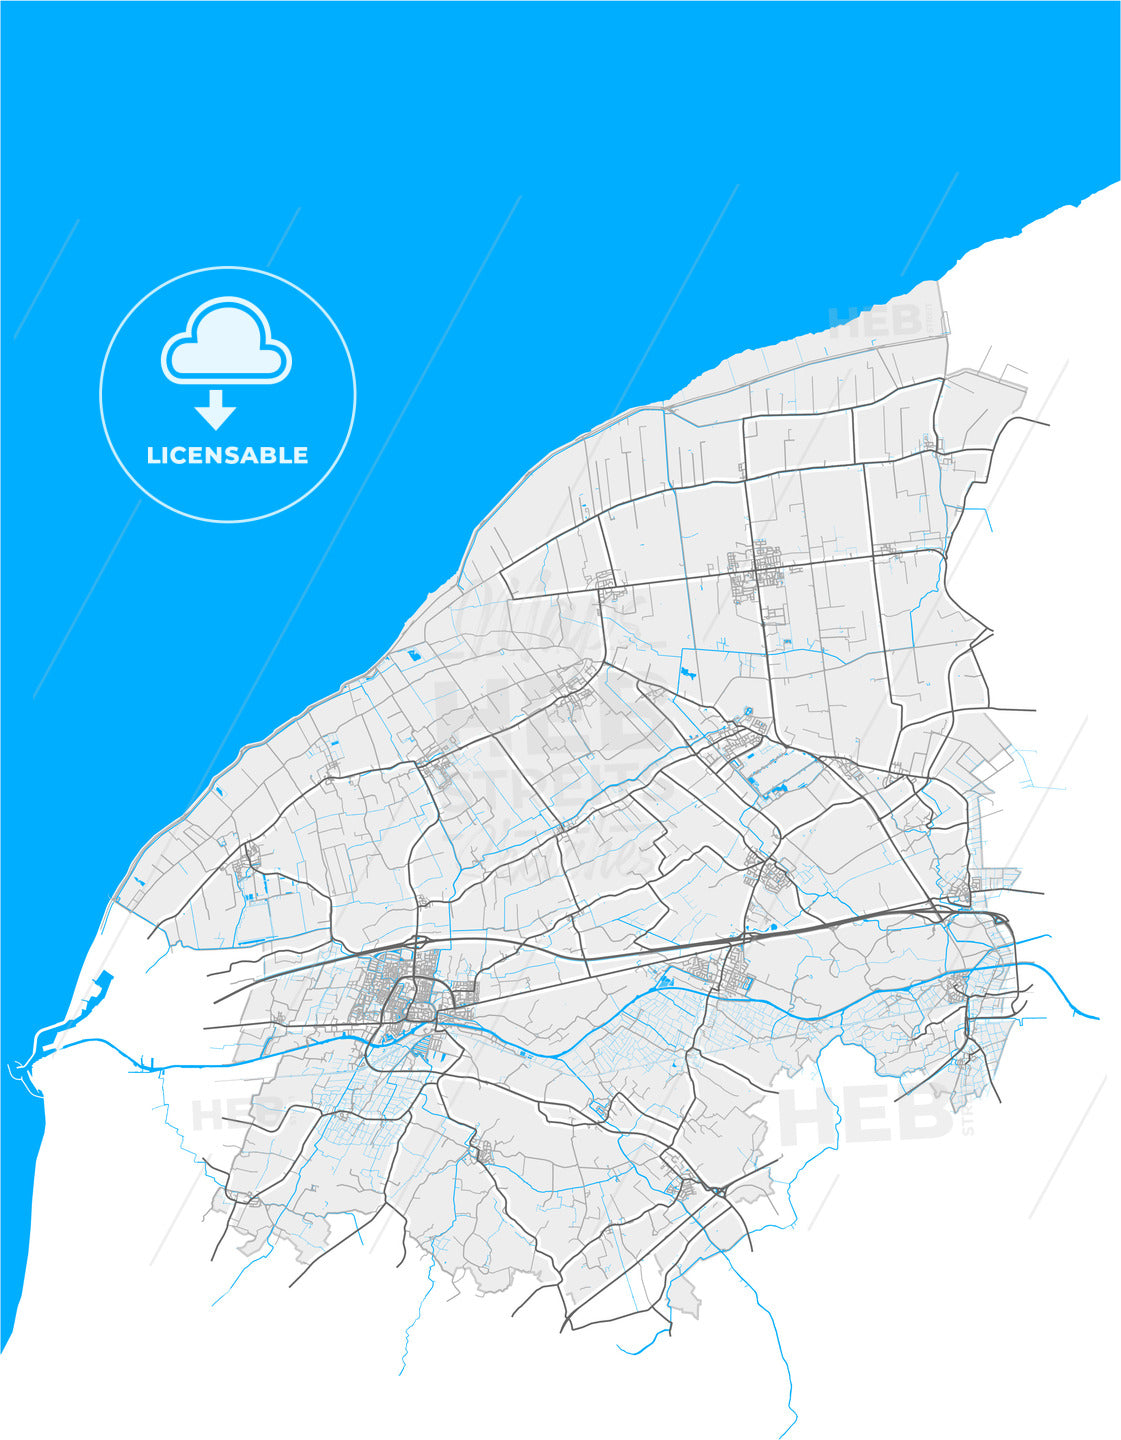 Waadhoeke, Friesland, Netherlands, high quality vector map